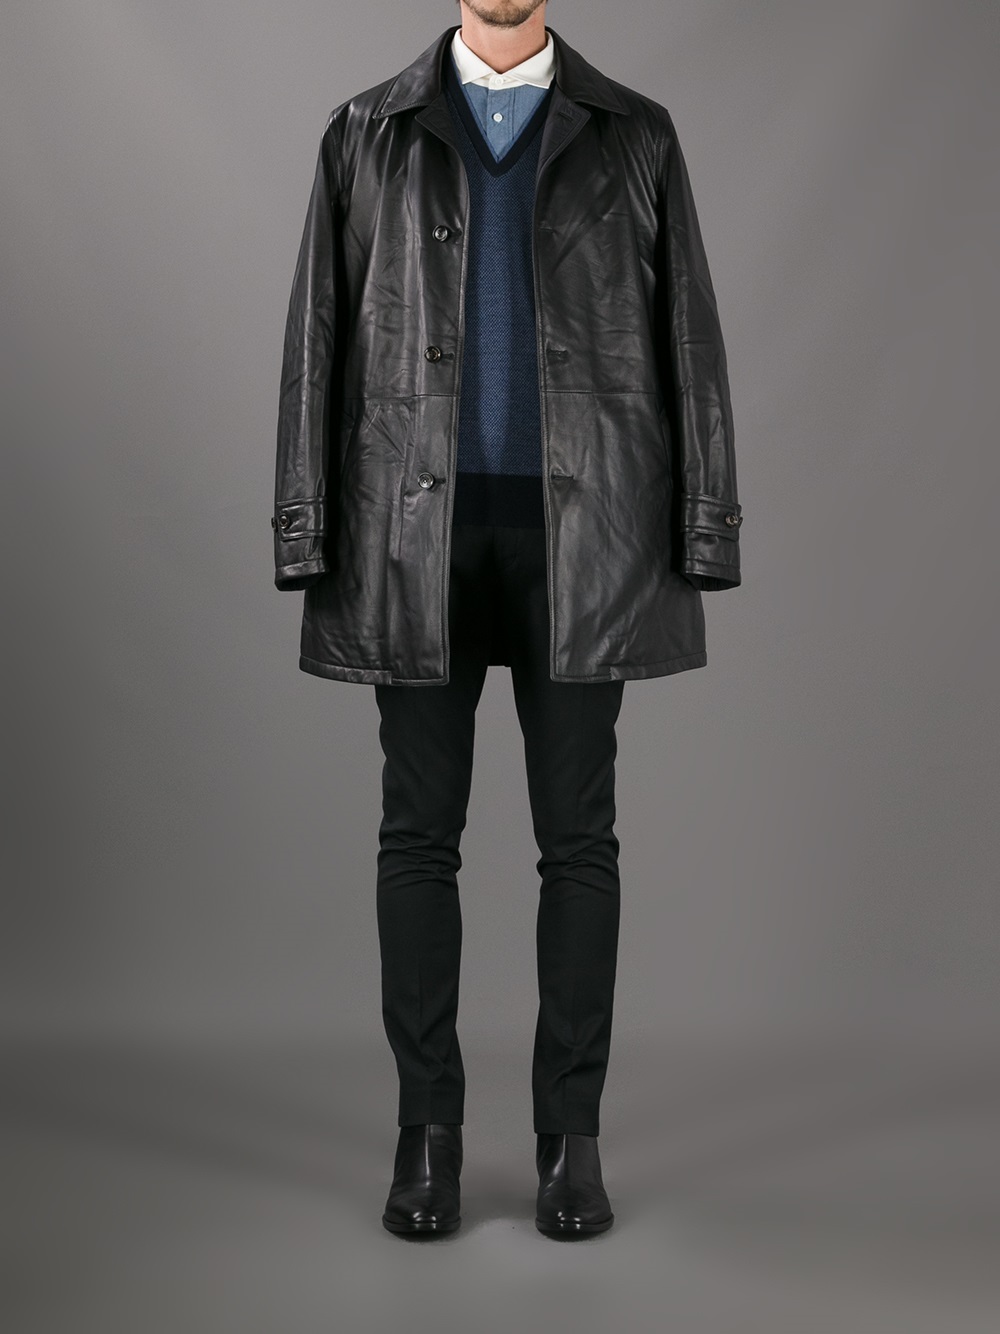 Lyst - Ermenegildo Zegna Classic Leather Jacket in Black for Men